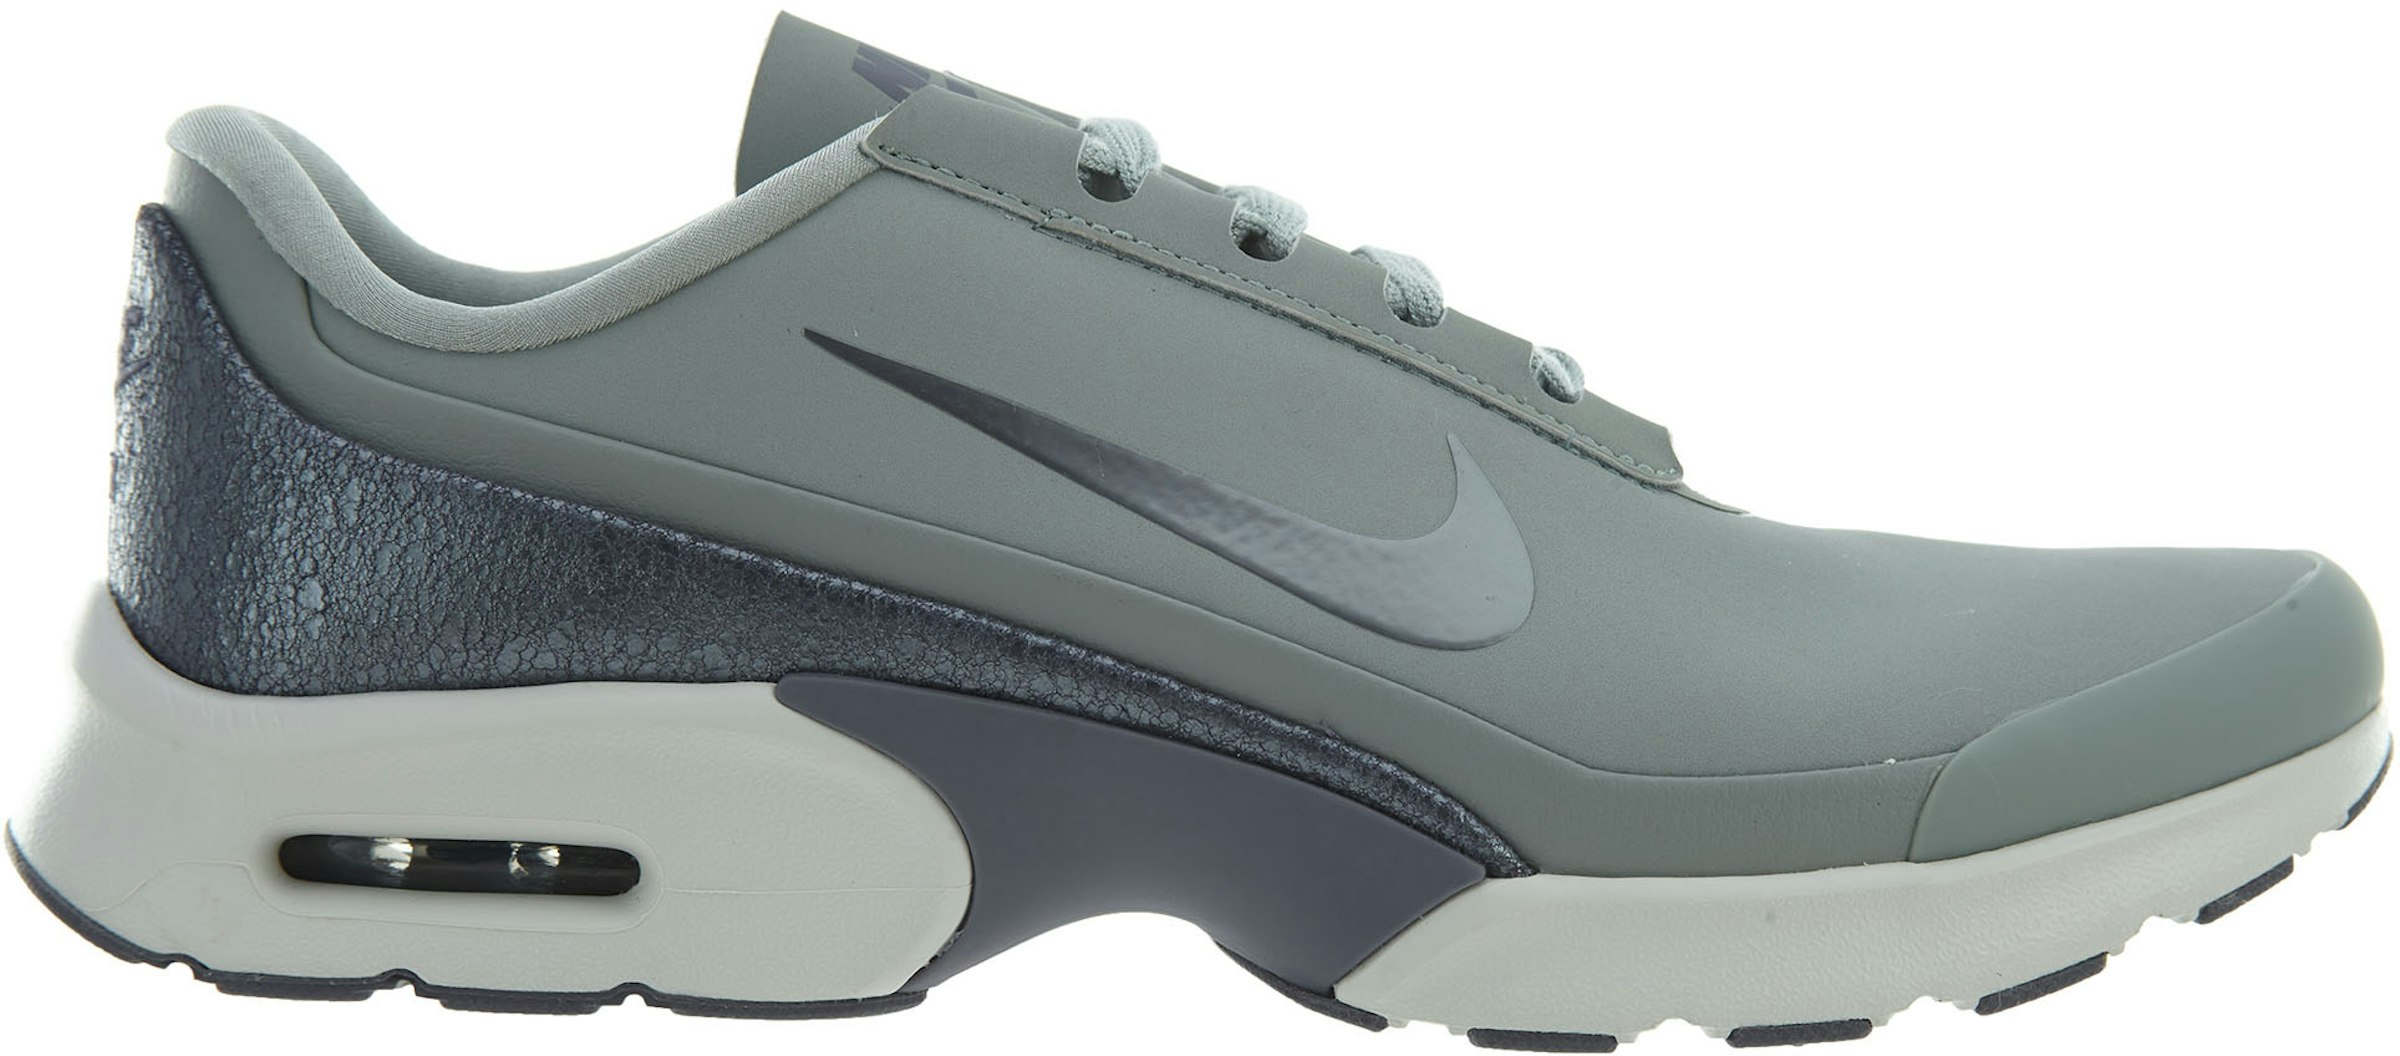 Ontvangst advocaat Bully Nike Air Max Jewell Leather Pumice Metallic Cool Grey (Women's) -  AH6790-002 - GB